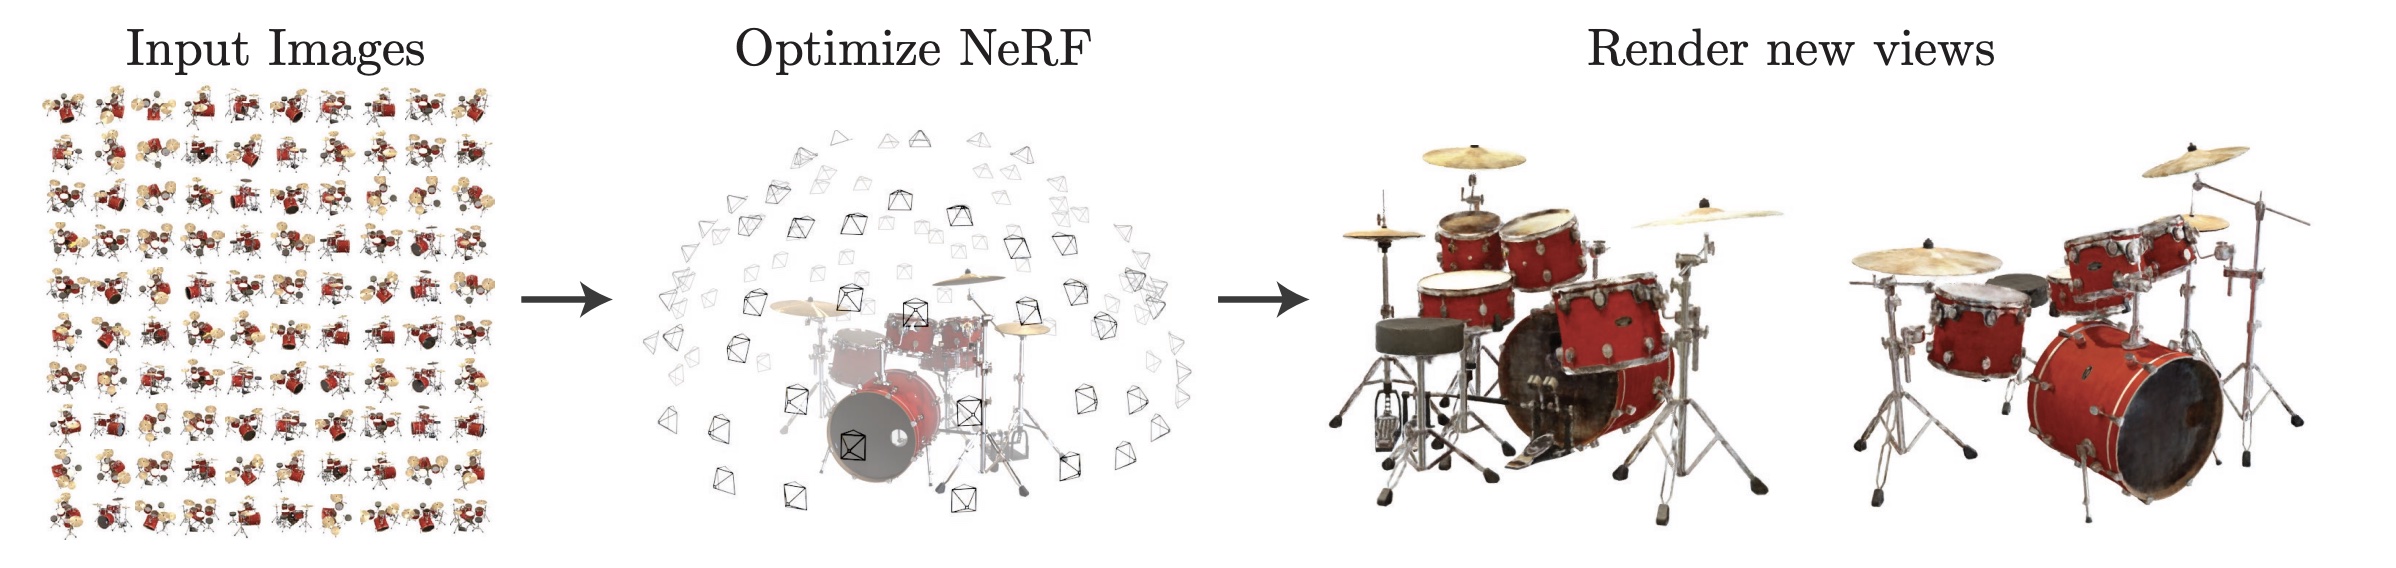 Image describing the NeRF training process